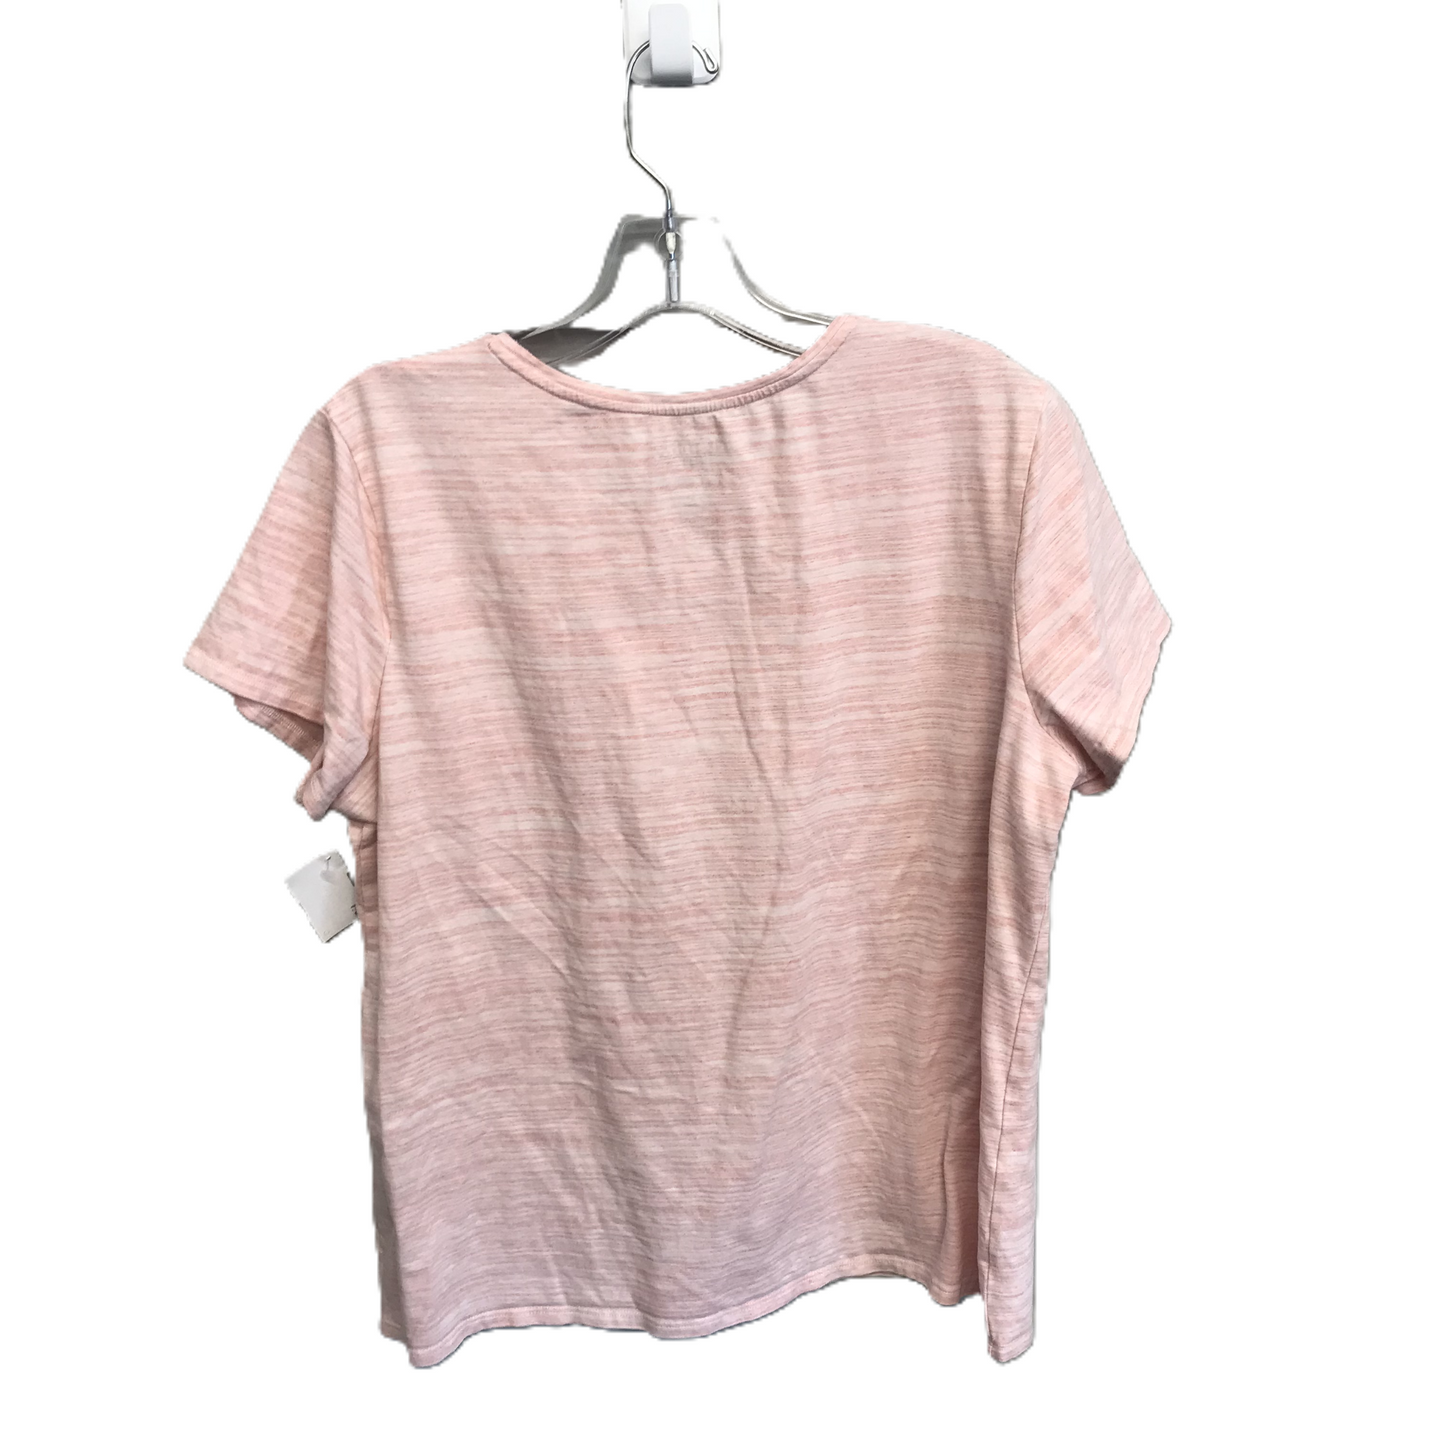 Peach Top Short Sleeve Basic By Croft And Barrow, Size: Xl